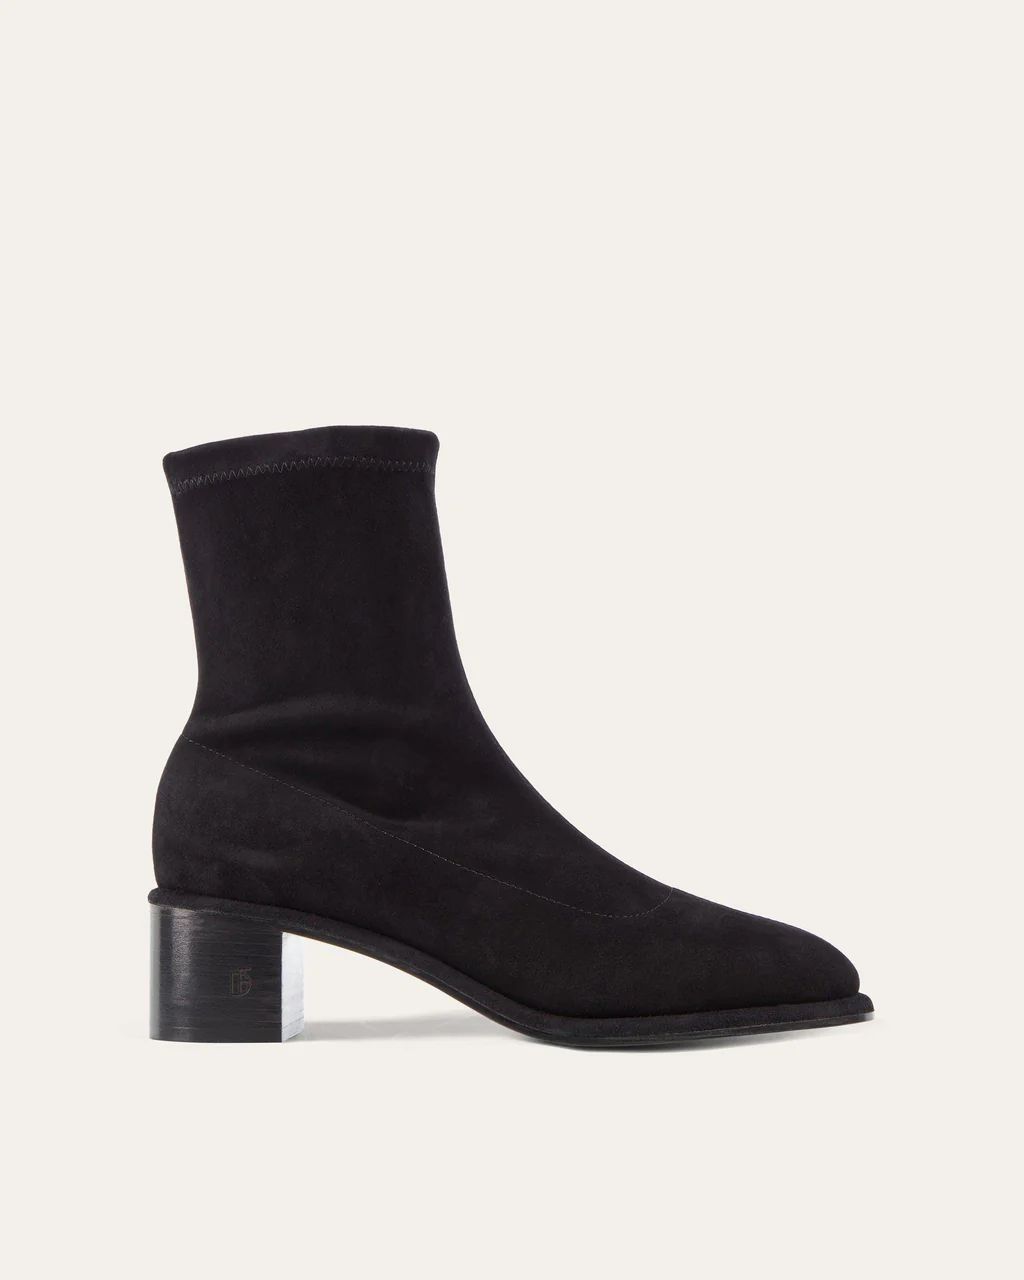 Iris Boot, Black Suede | Dear Frances